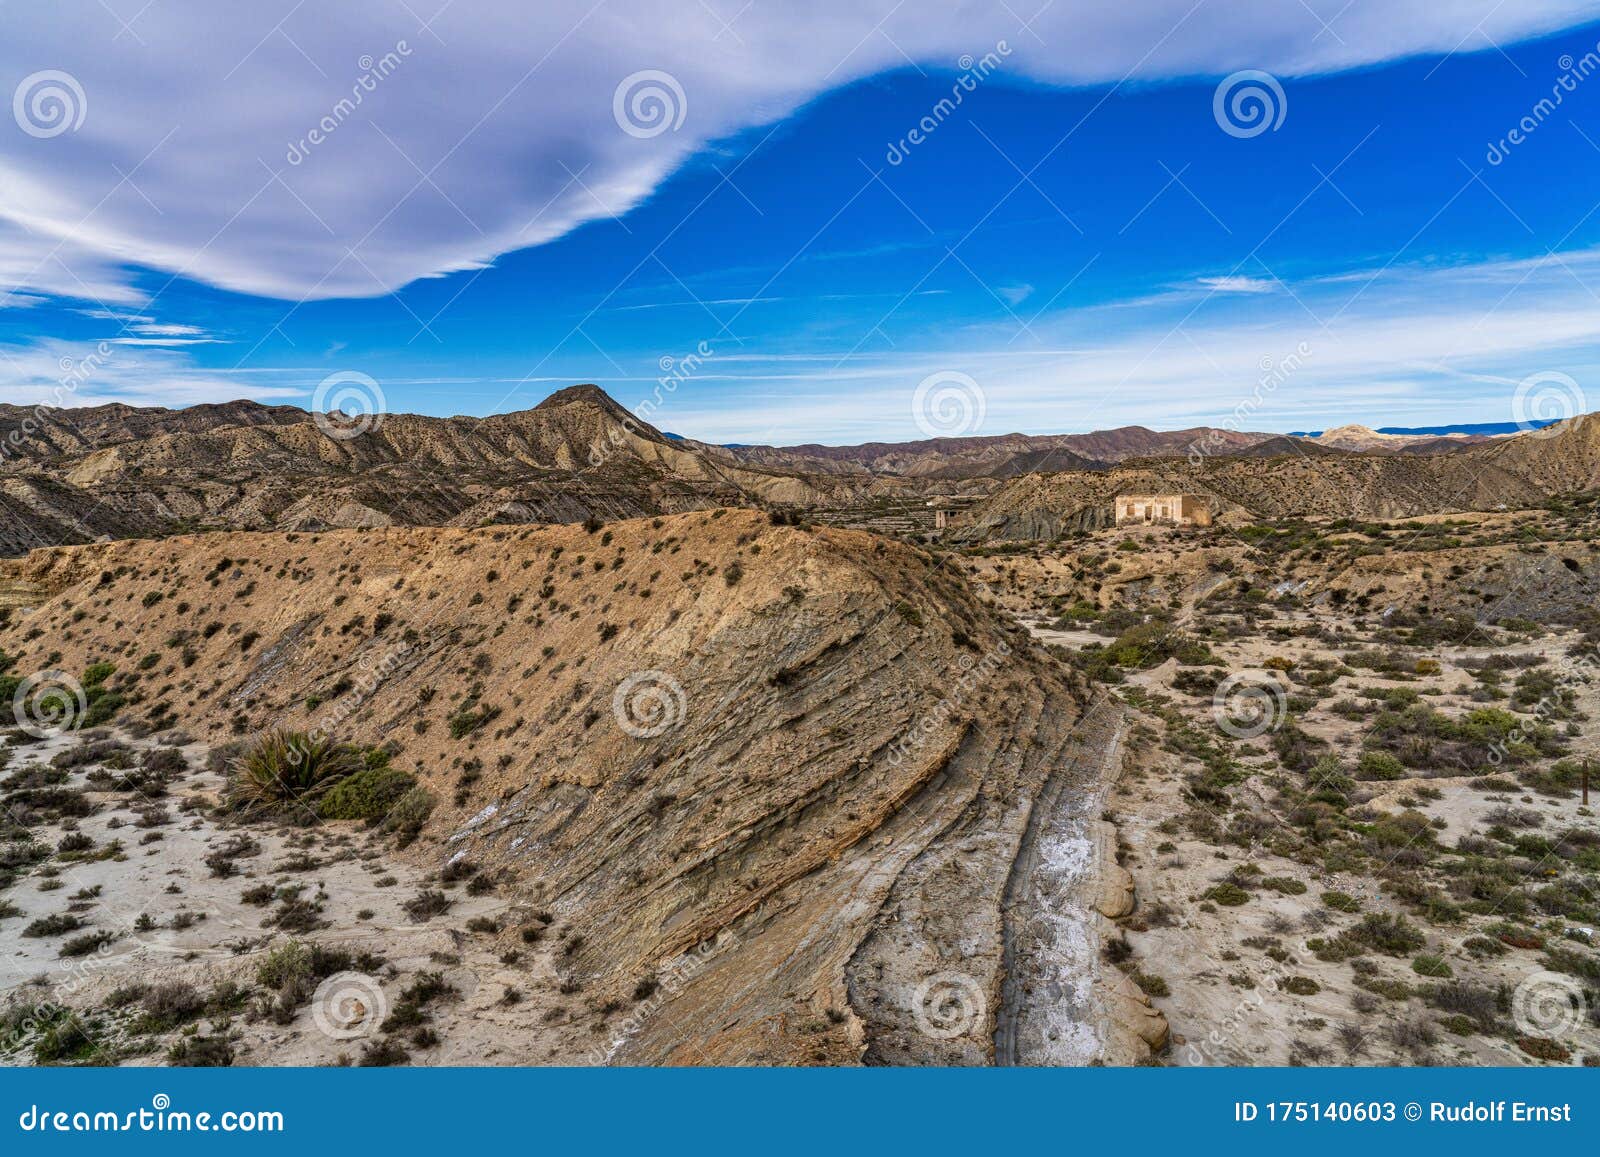 tabernas desert, desierto de tabernas near almeria, andalusia region, spain